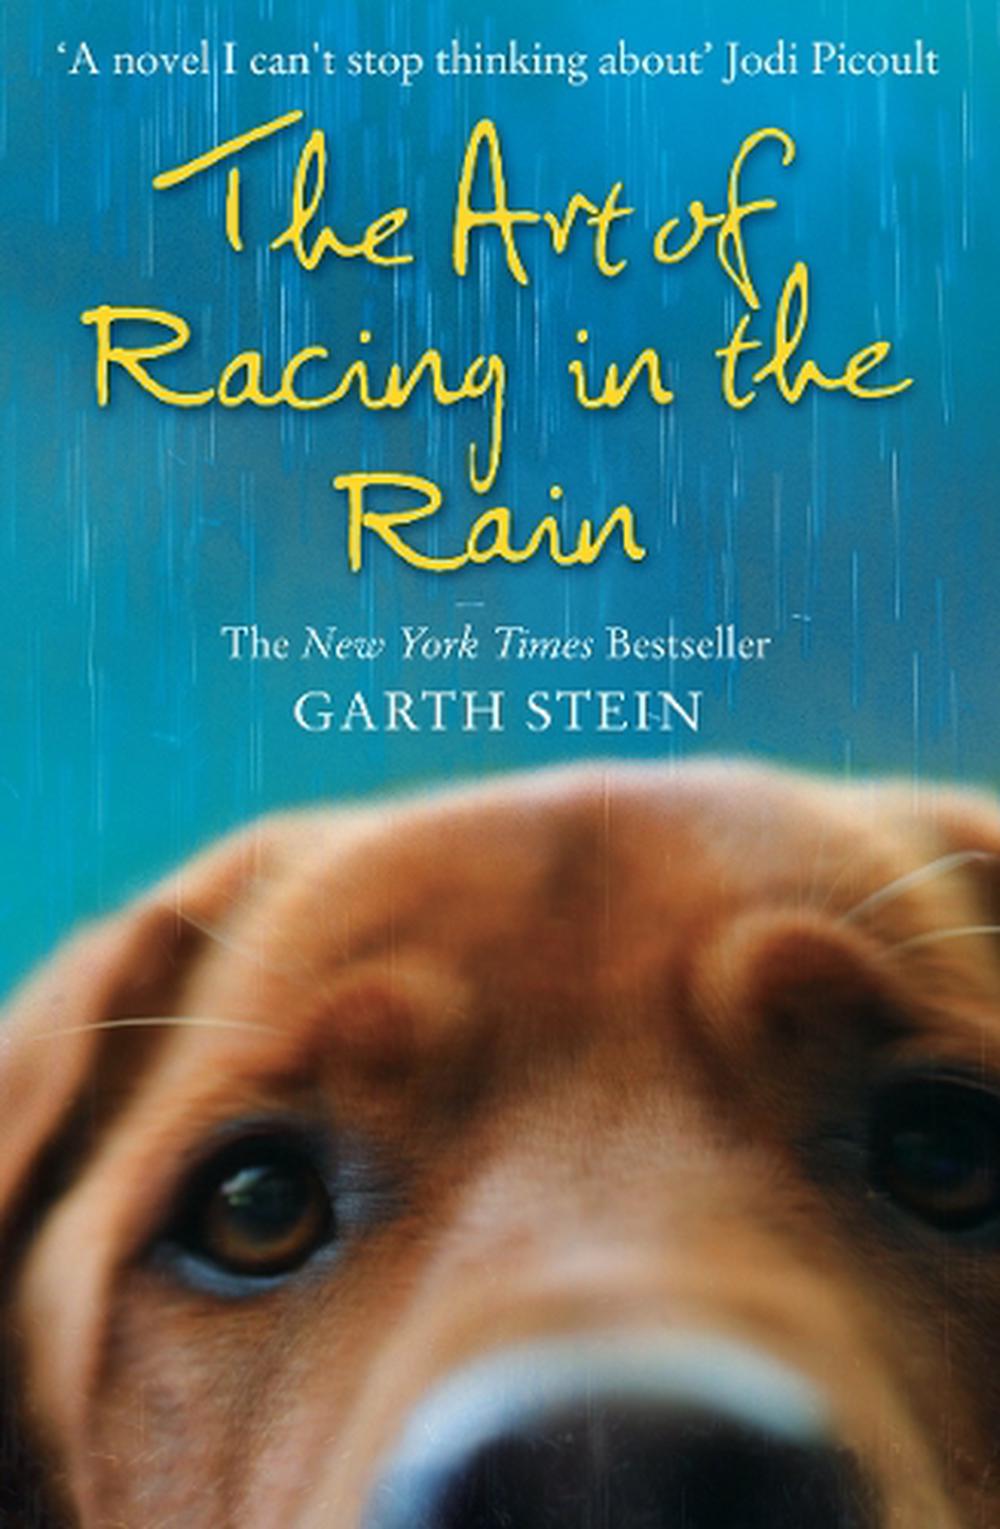 racing the rain book